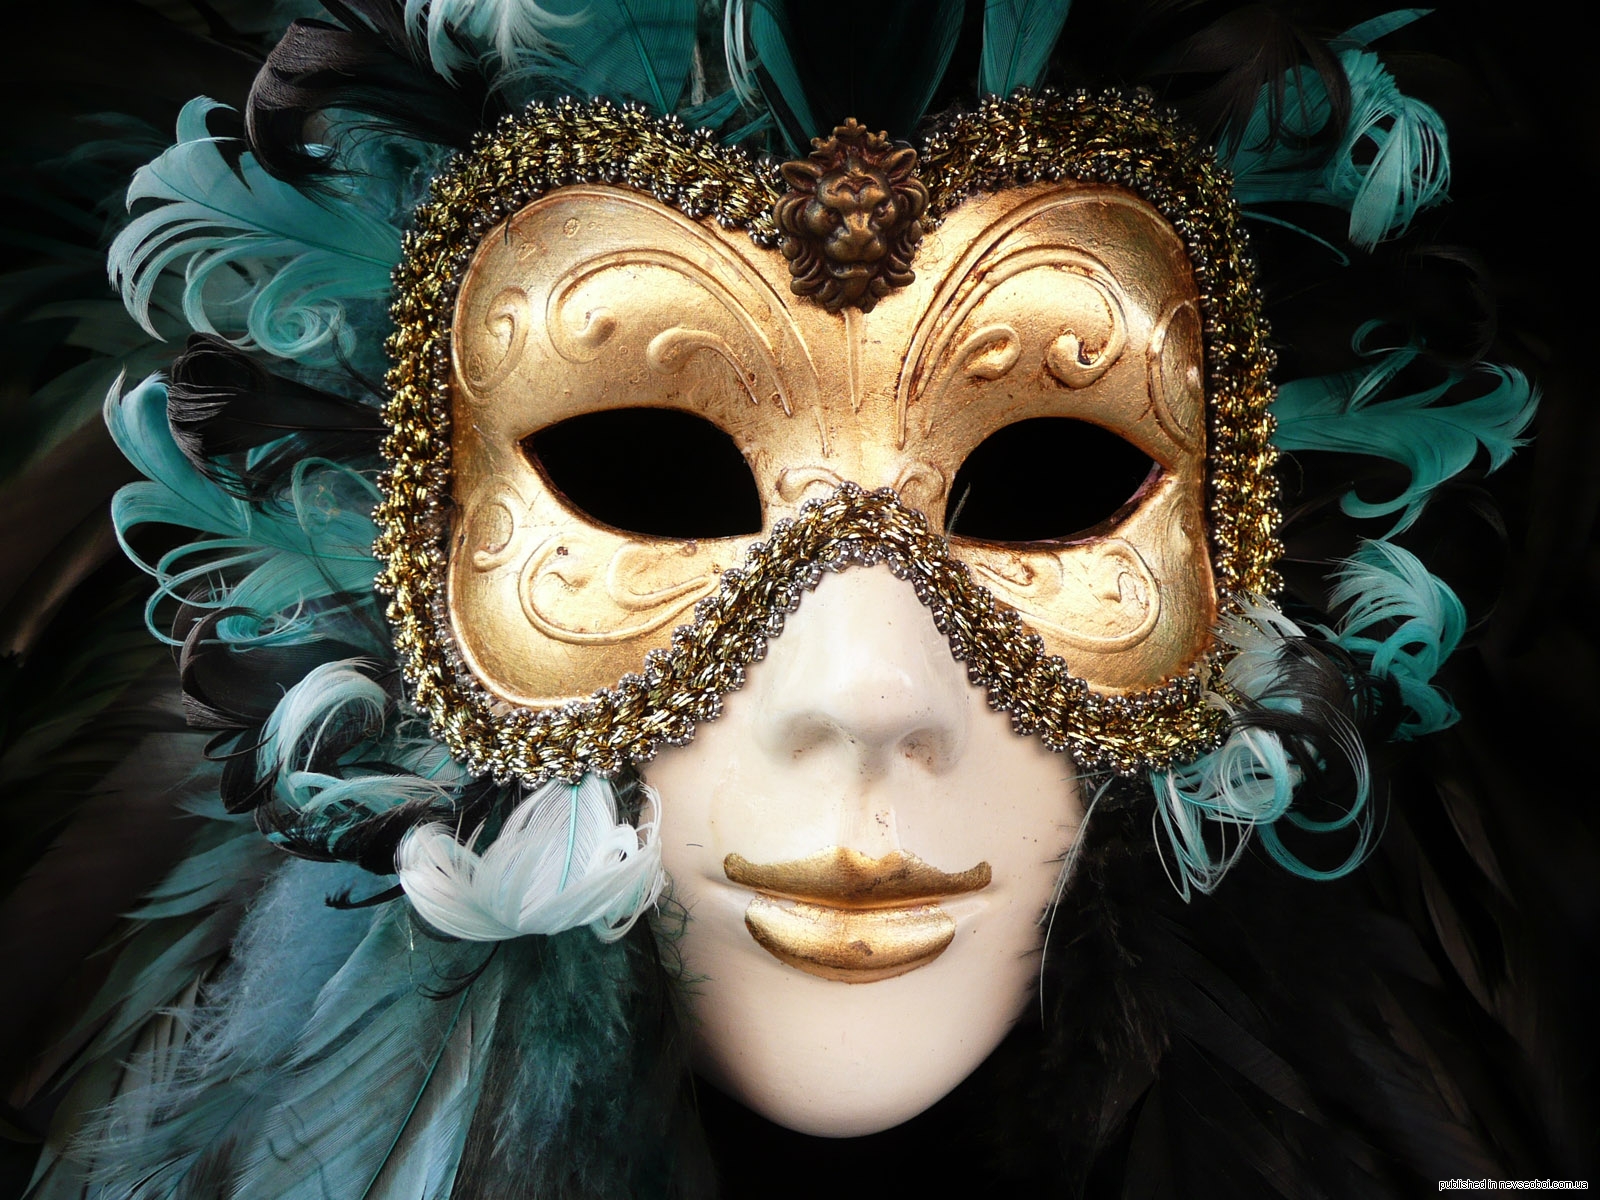 Маска 20 24. Джузеппе Верди "бал-маскарад". Венецианская маска Вольтер. Венецианская маска Арлекино. Венецианский карнавал Коломбина.